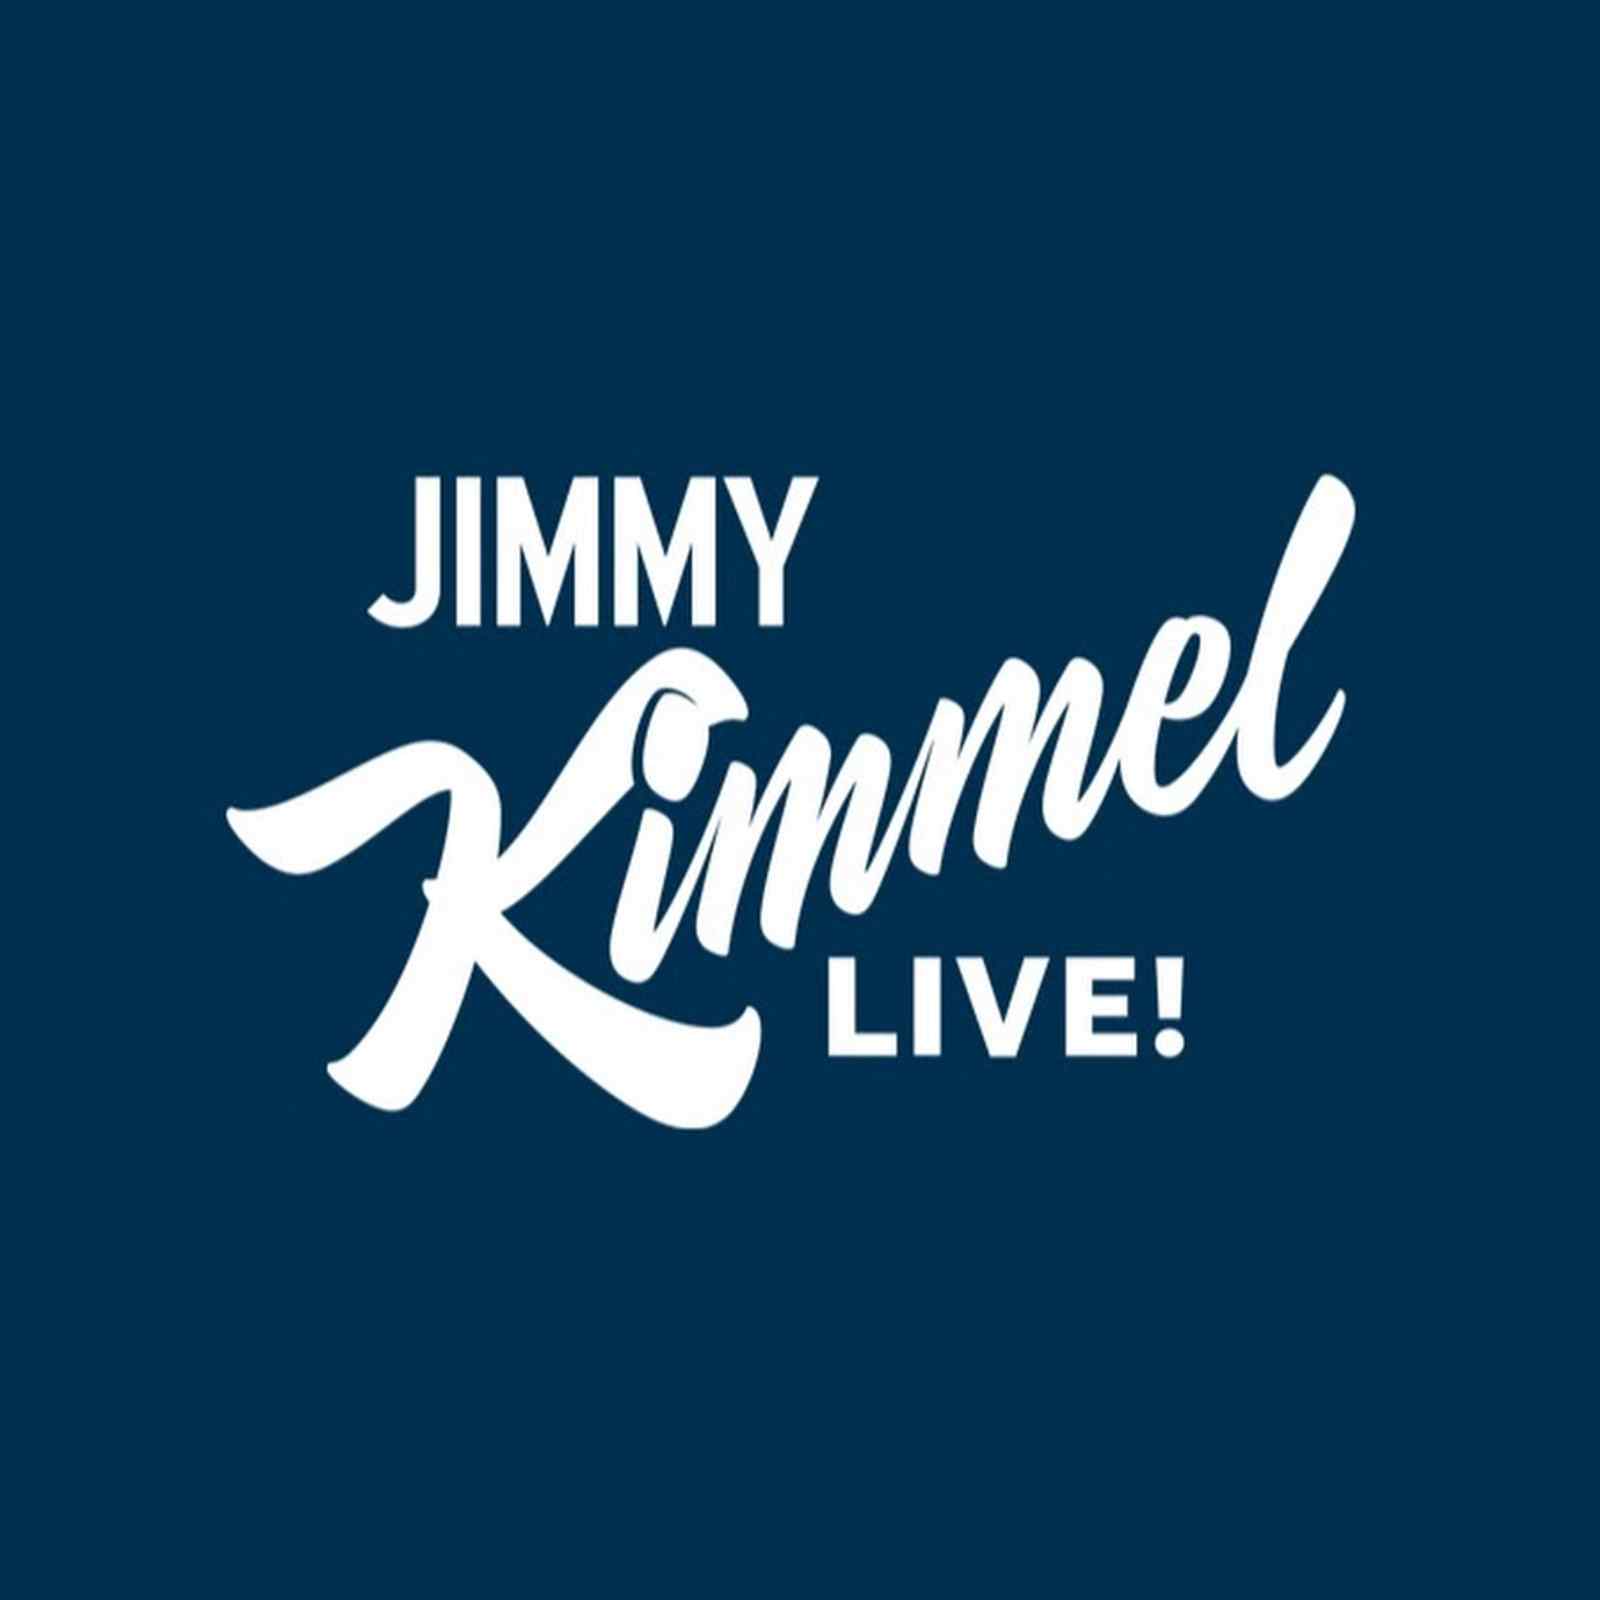 Jimmy Kimmel Live!: Old Dominion